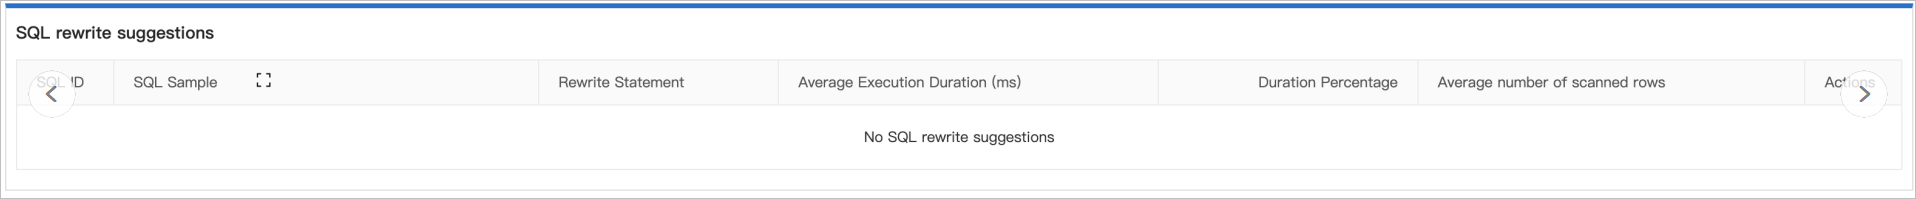 SQL Rewrite Suggestions